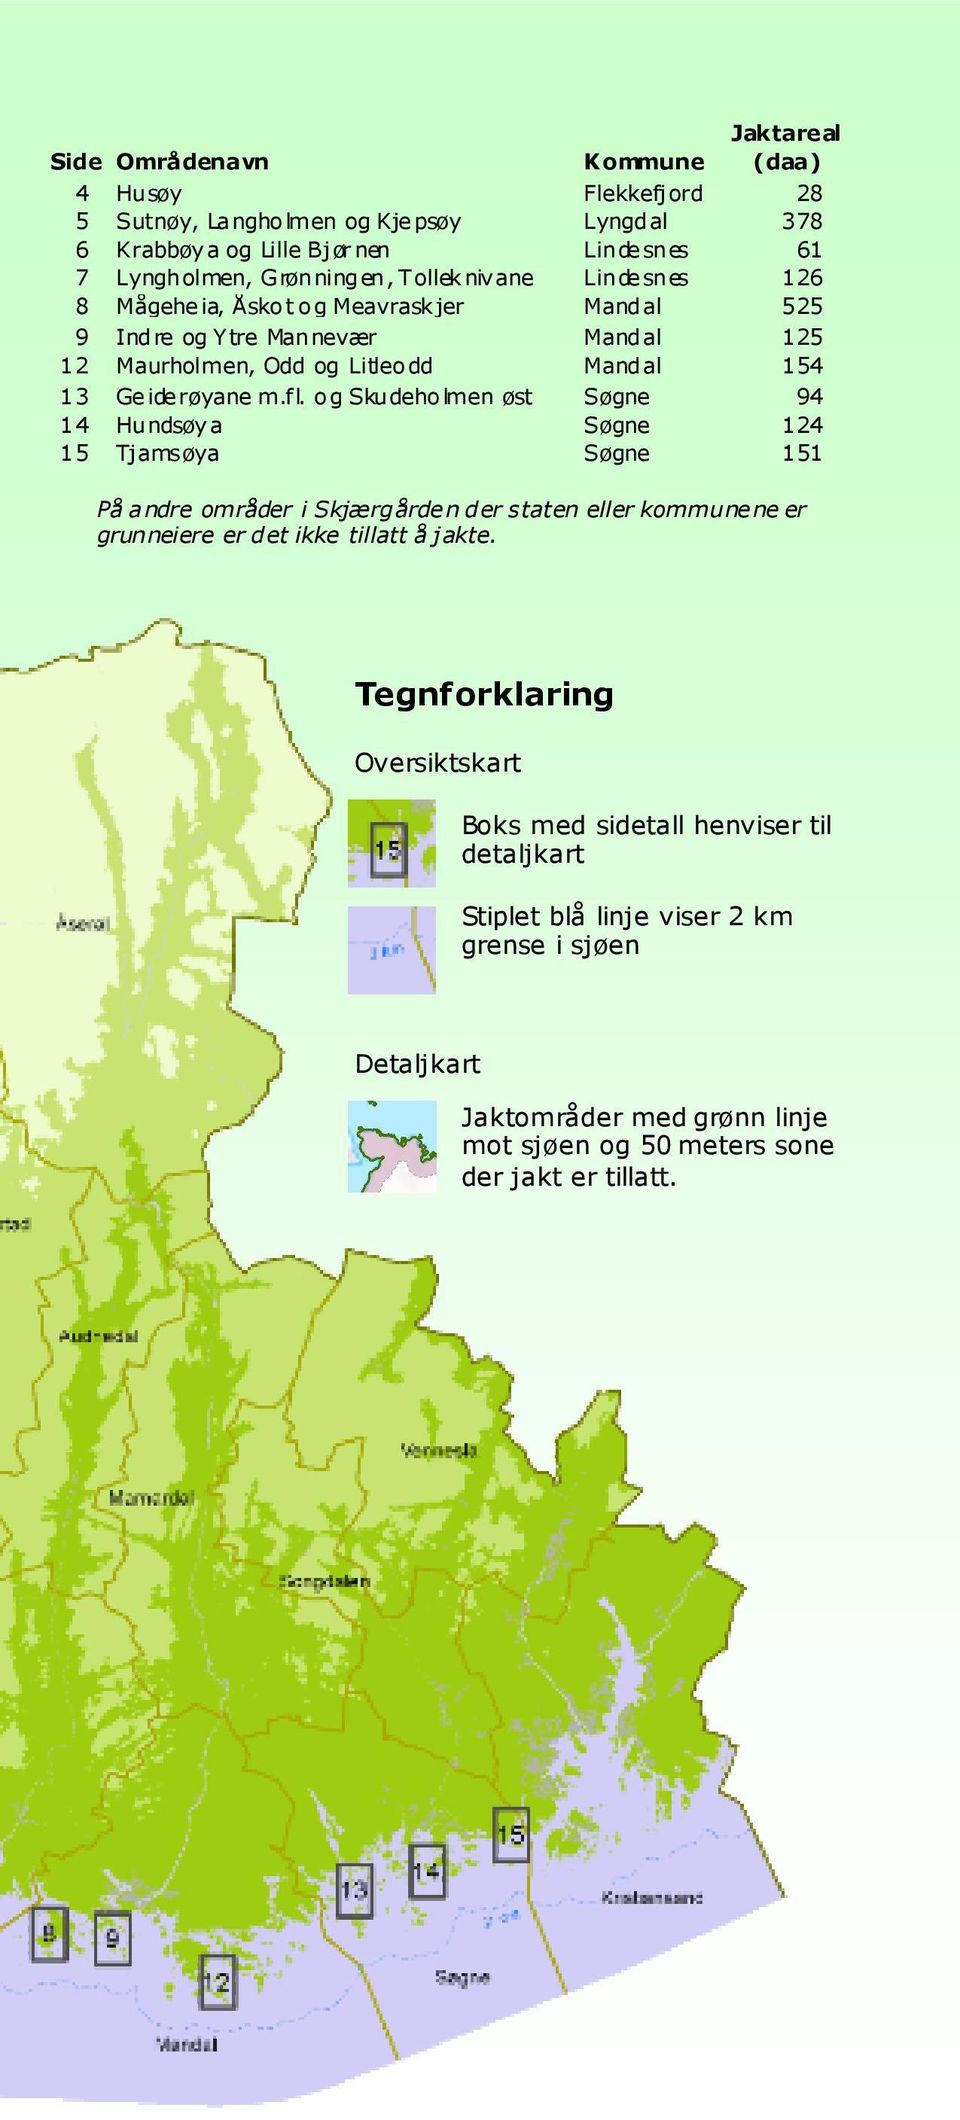 og Skudeholmen øst Søgne 94 14 Hundsøya Søgne 124 15 Tjamsøya Søgne 151 På andre områder i Skjærgården der staten eller kommunene er grunneiere er det ikke tillatt å jakte.